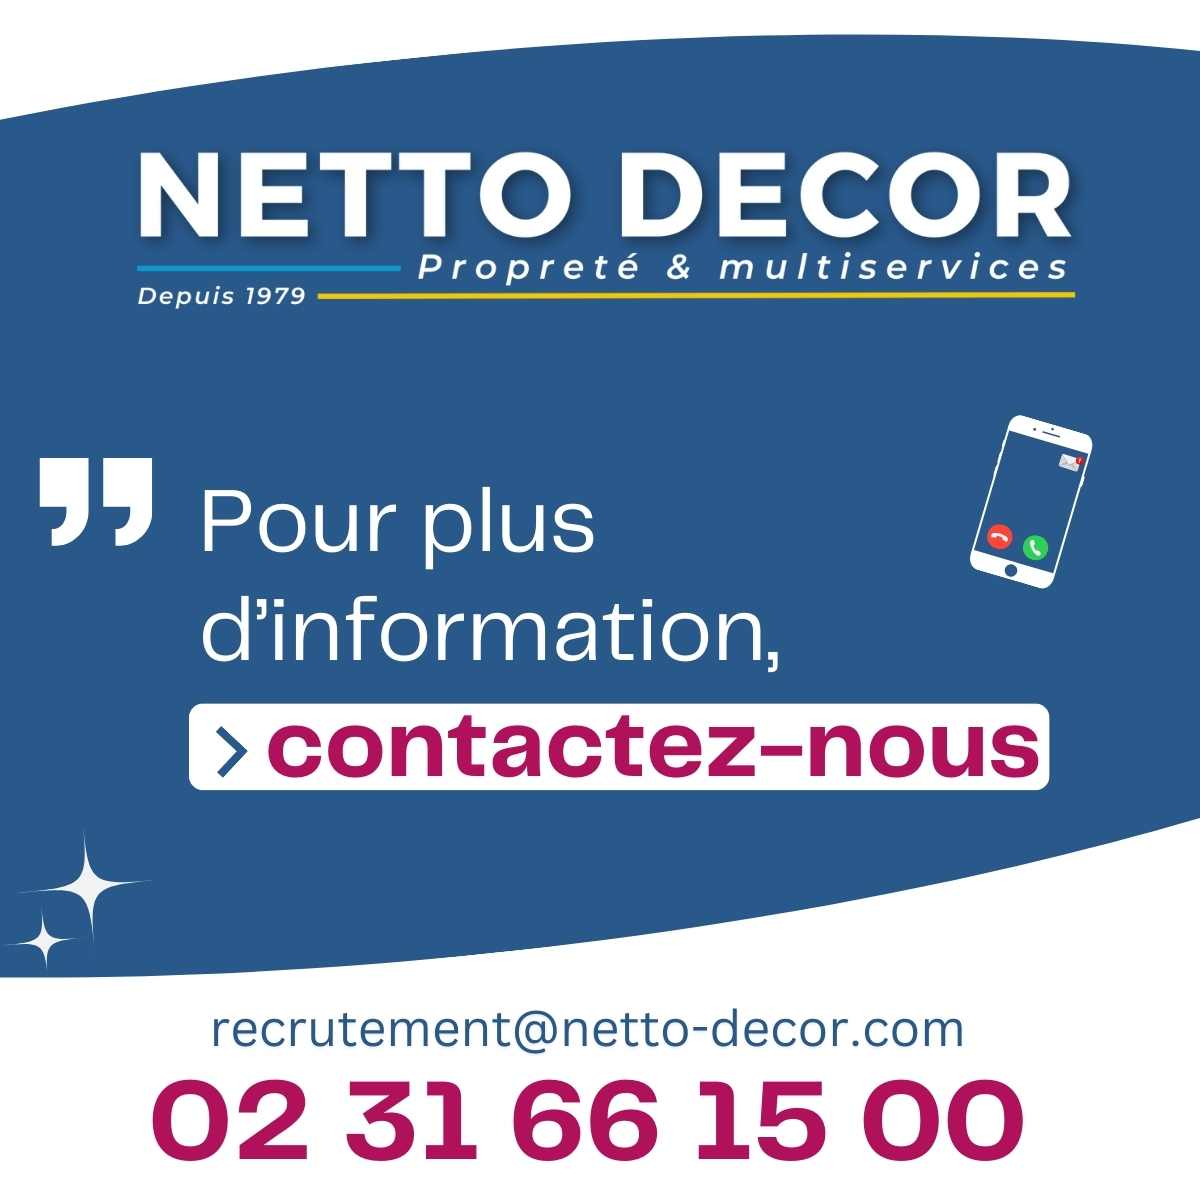 Contact Netto Decor Propreté